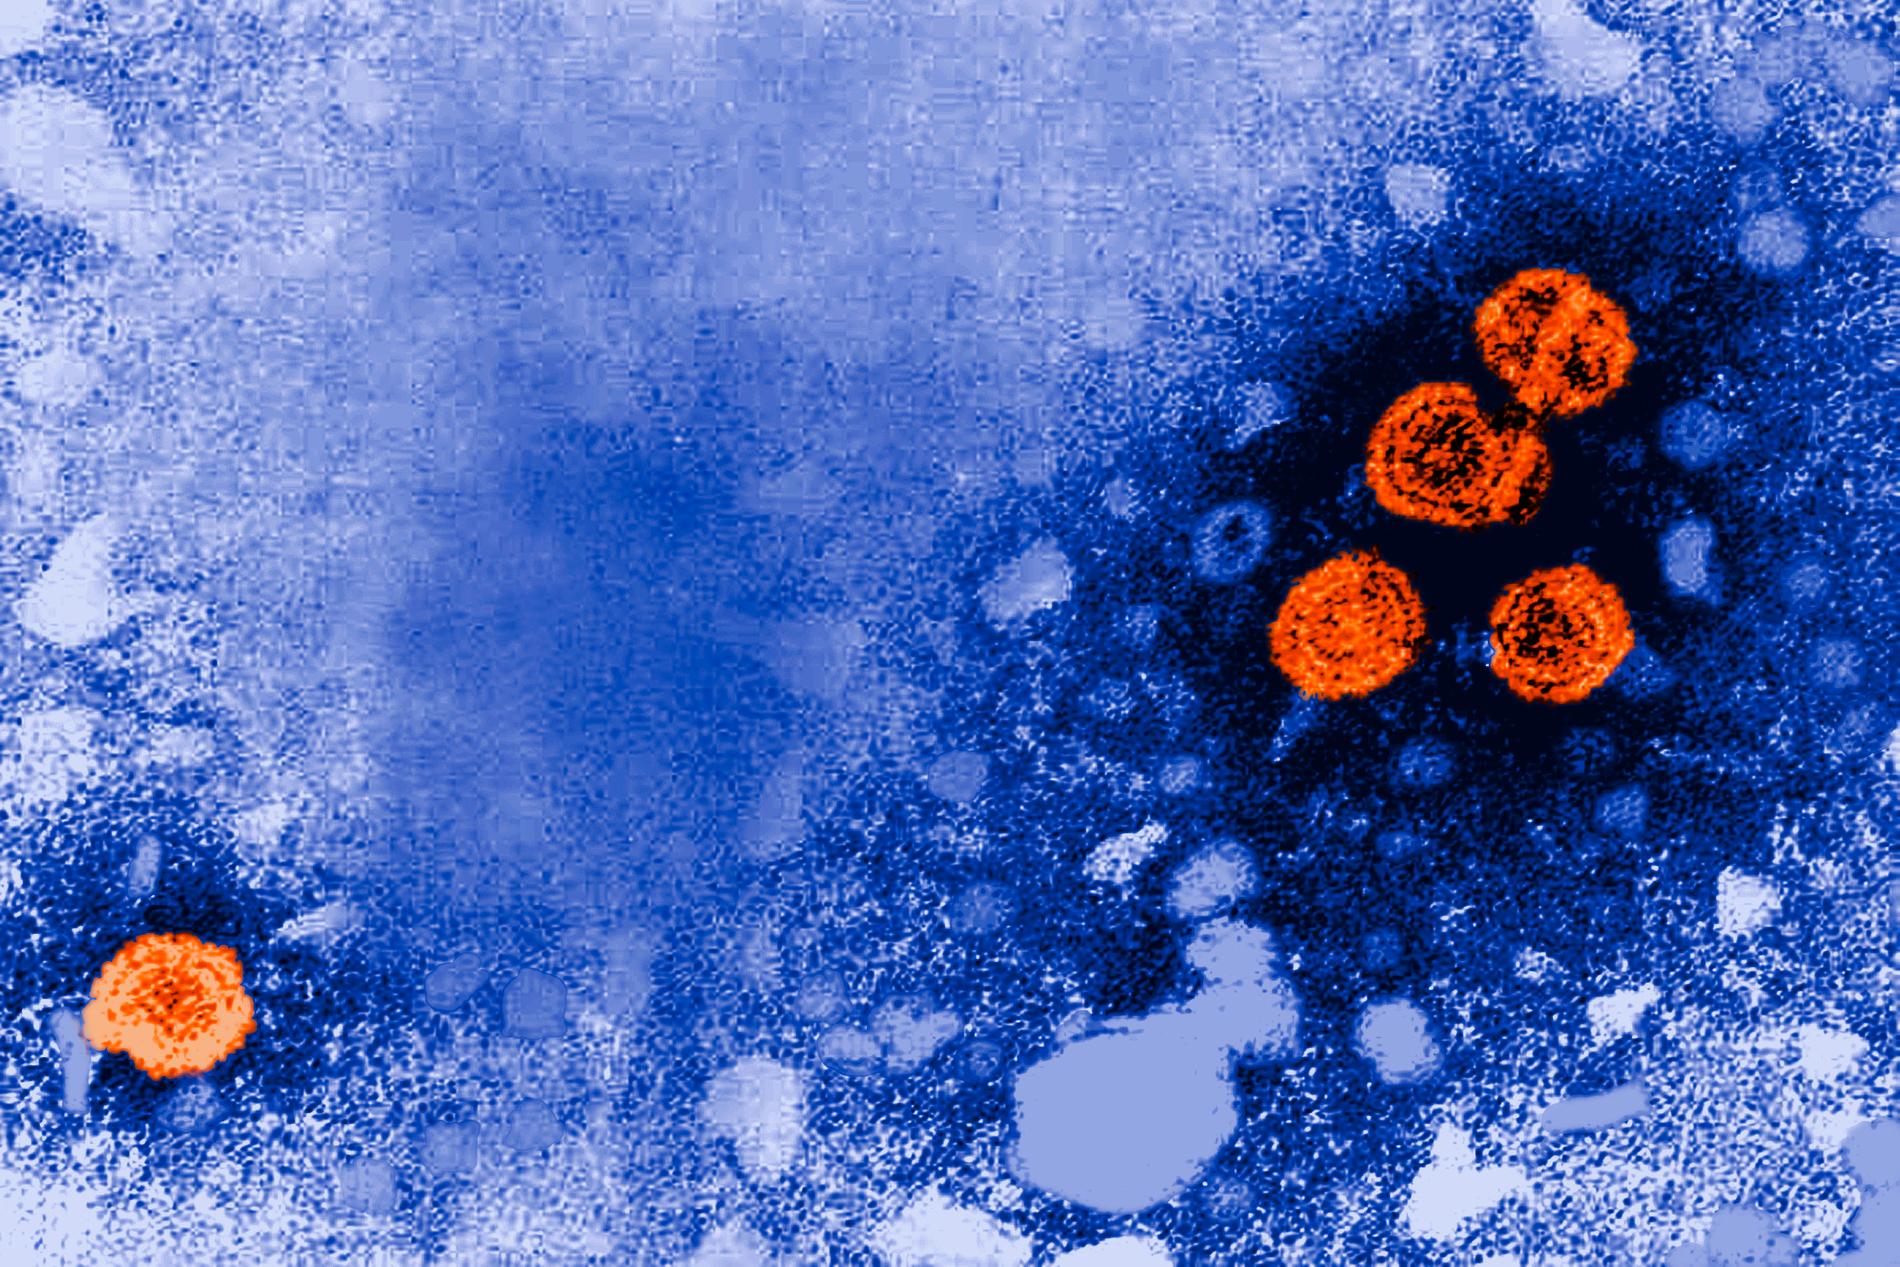 En bild tagen med elektronmikroskop visar hepatit B-viruset (orange), som orsakar en inflammation i levern.